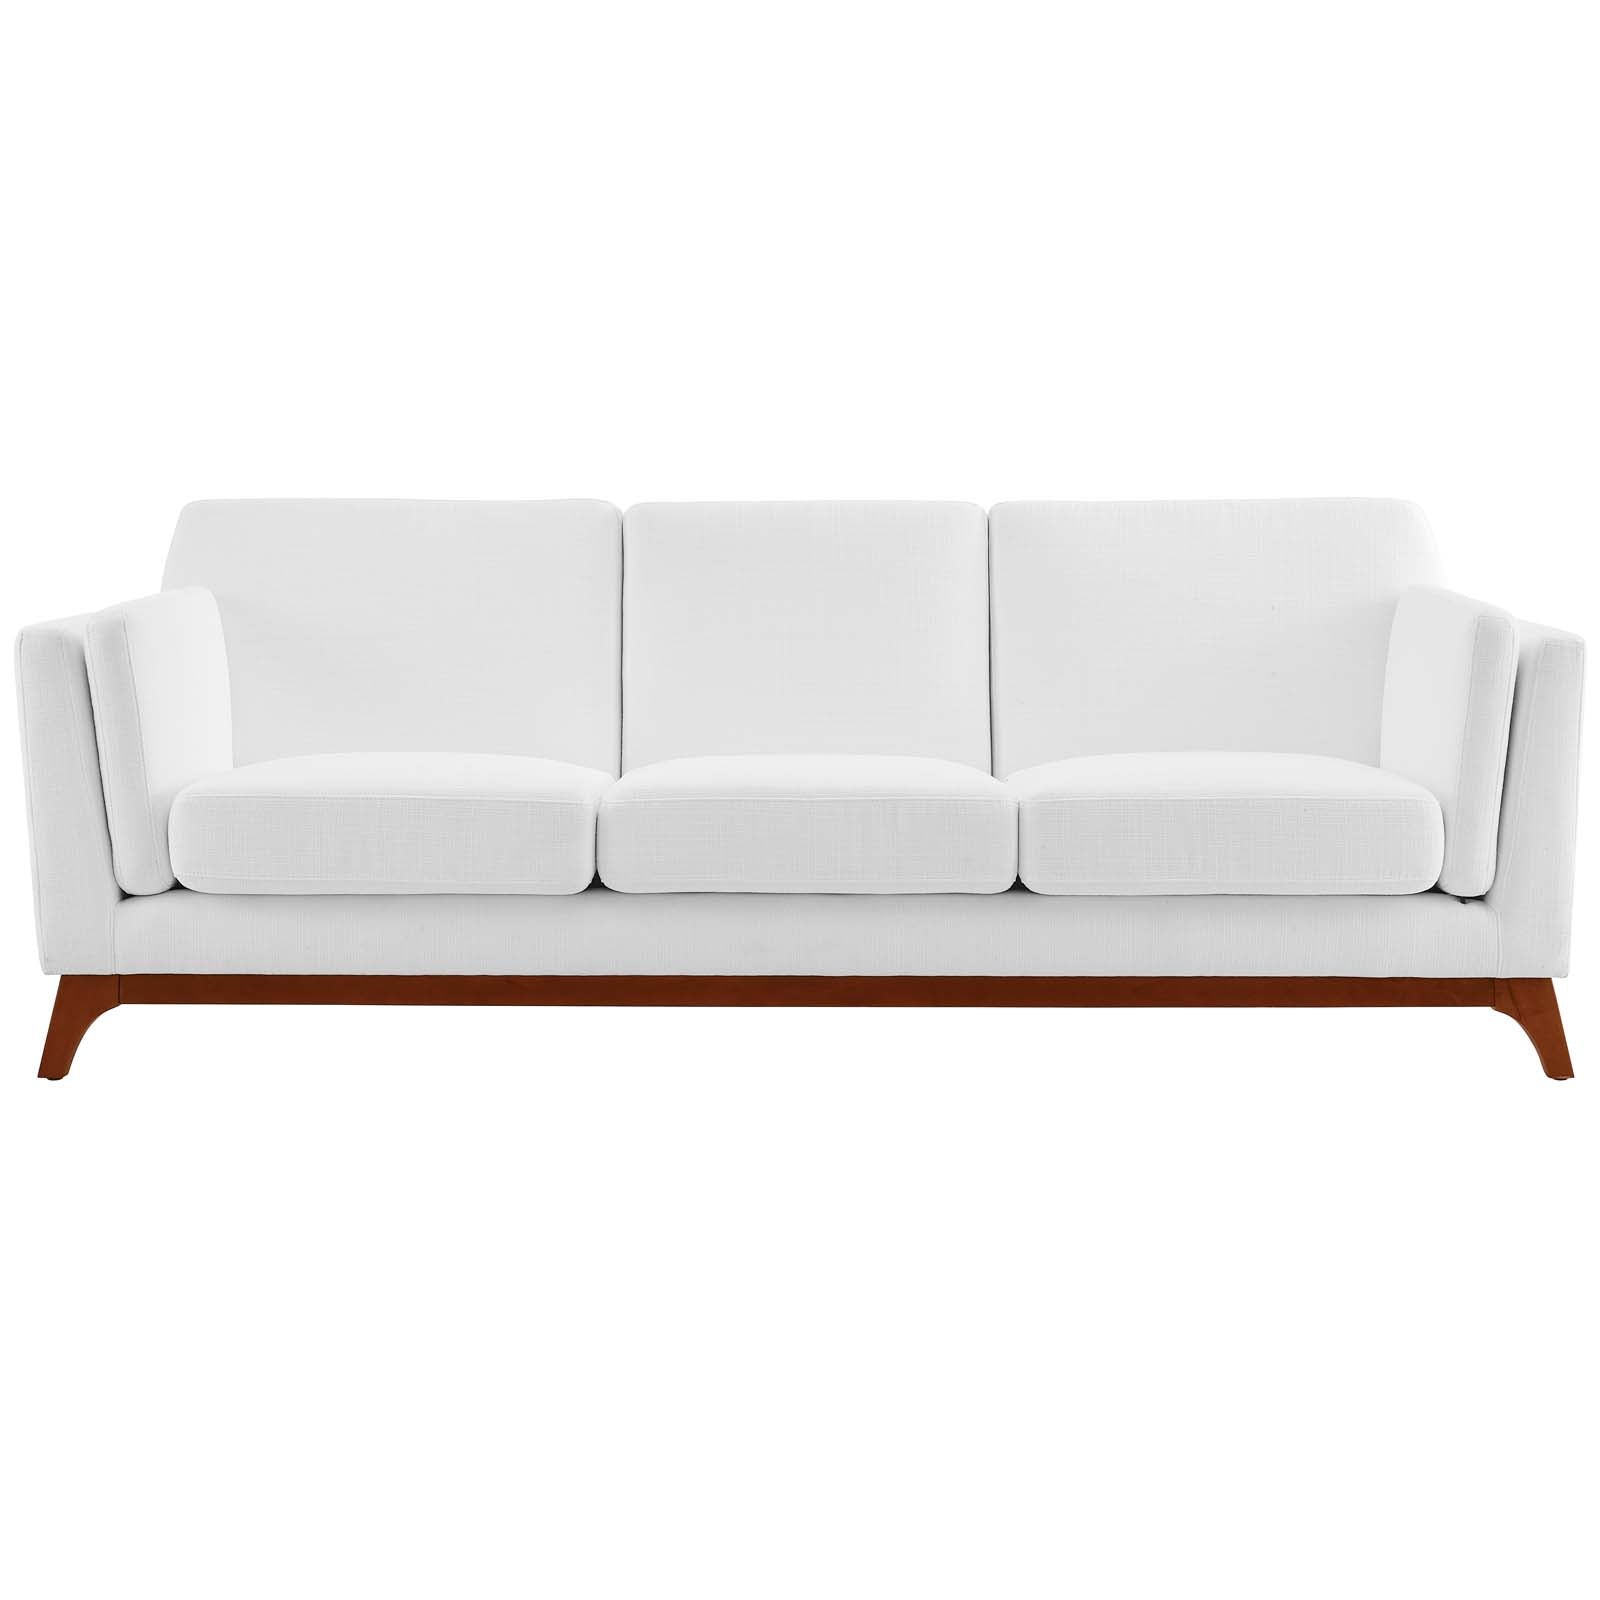 Chance Upholstered Fabric Sofa - East Shore Modern Home Furnishings